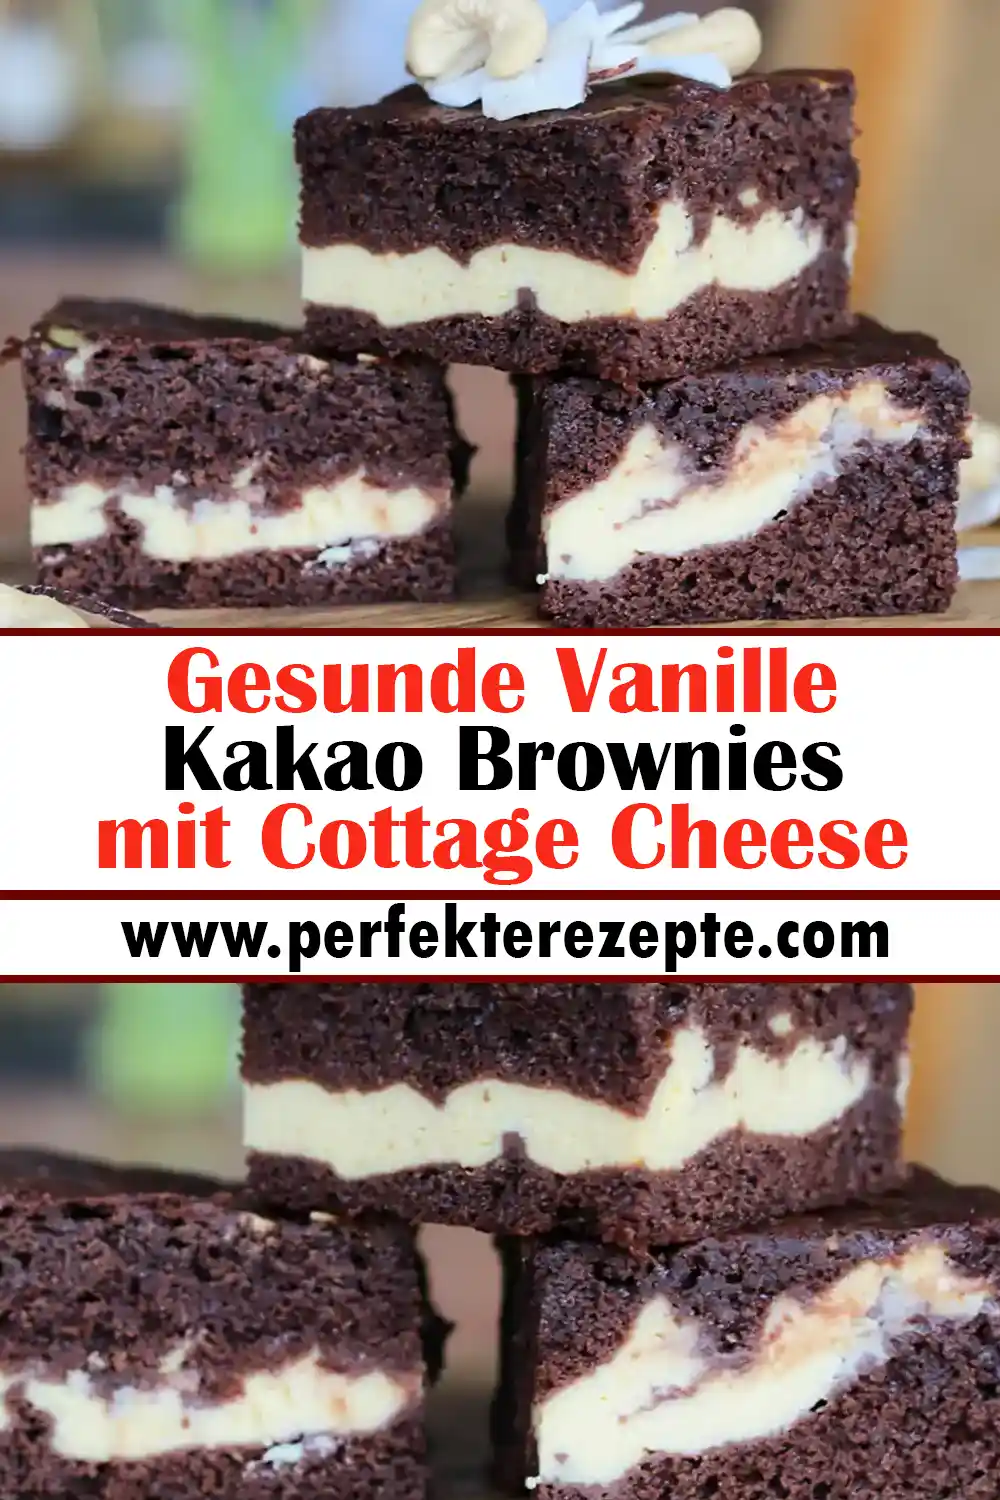 Gesunde Vanille-Kakao-Brownies mit Cottage Cheese Rezept